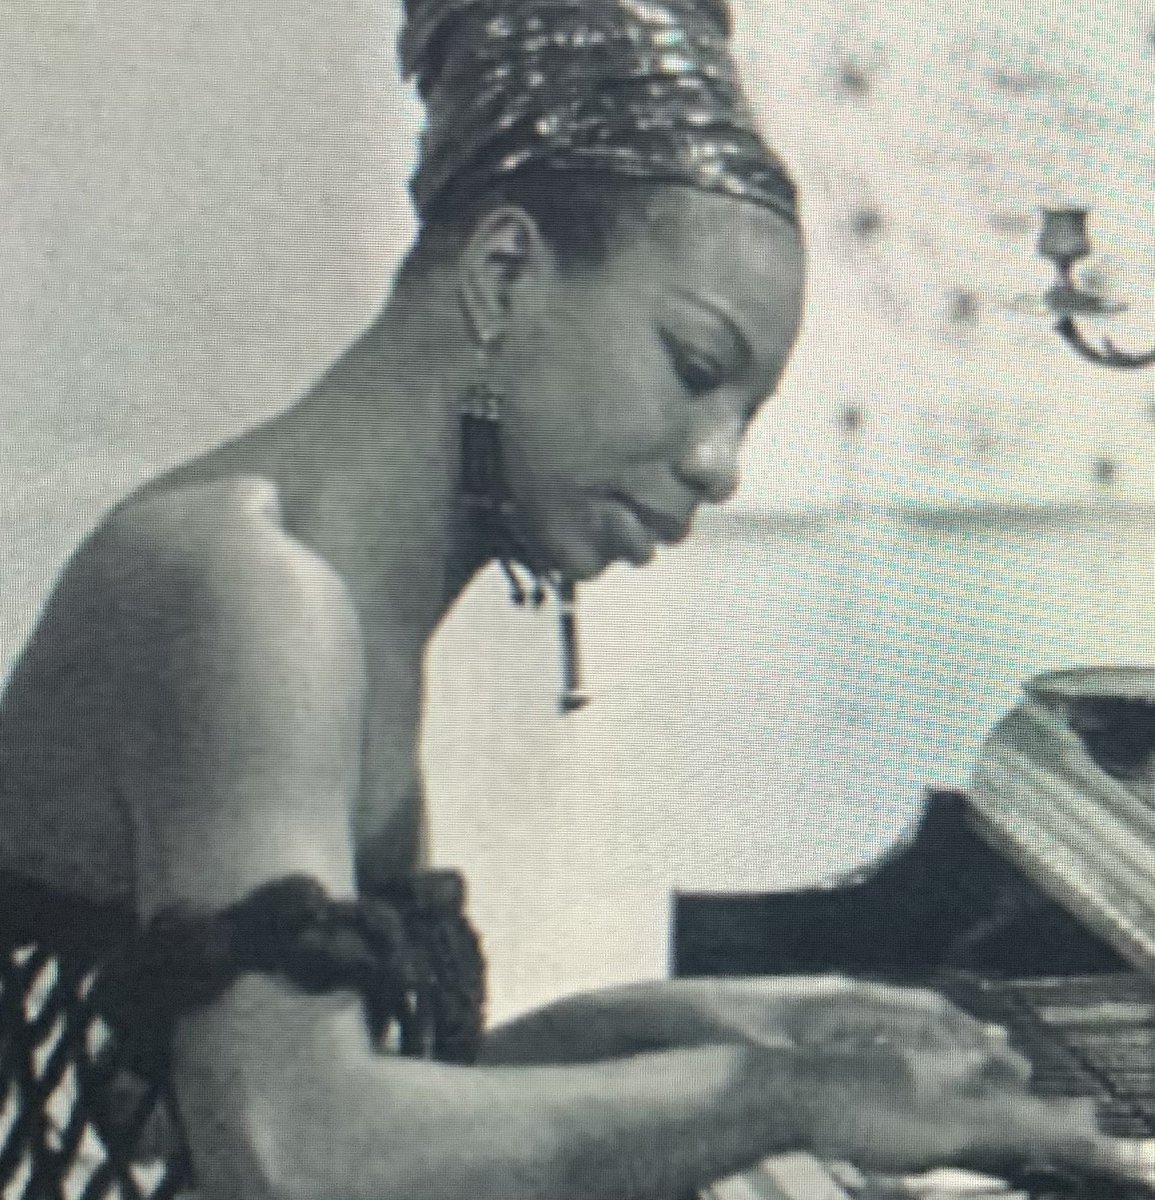 Nina Simone -I put a spell on you. pic.twitter.com/JFmZiMIeKZ. youtu.be/ua2...